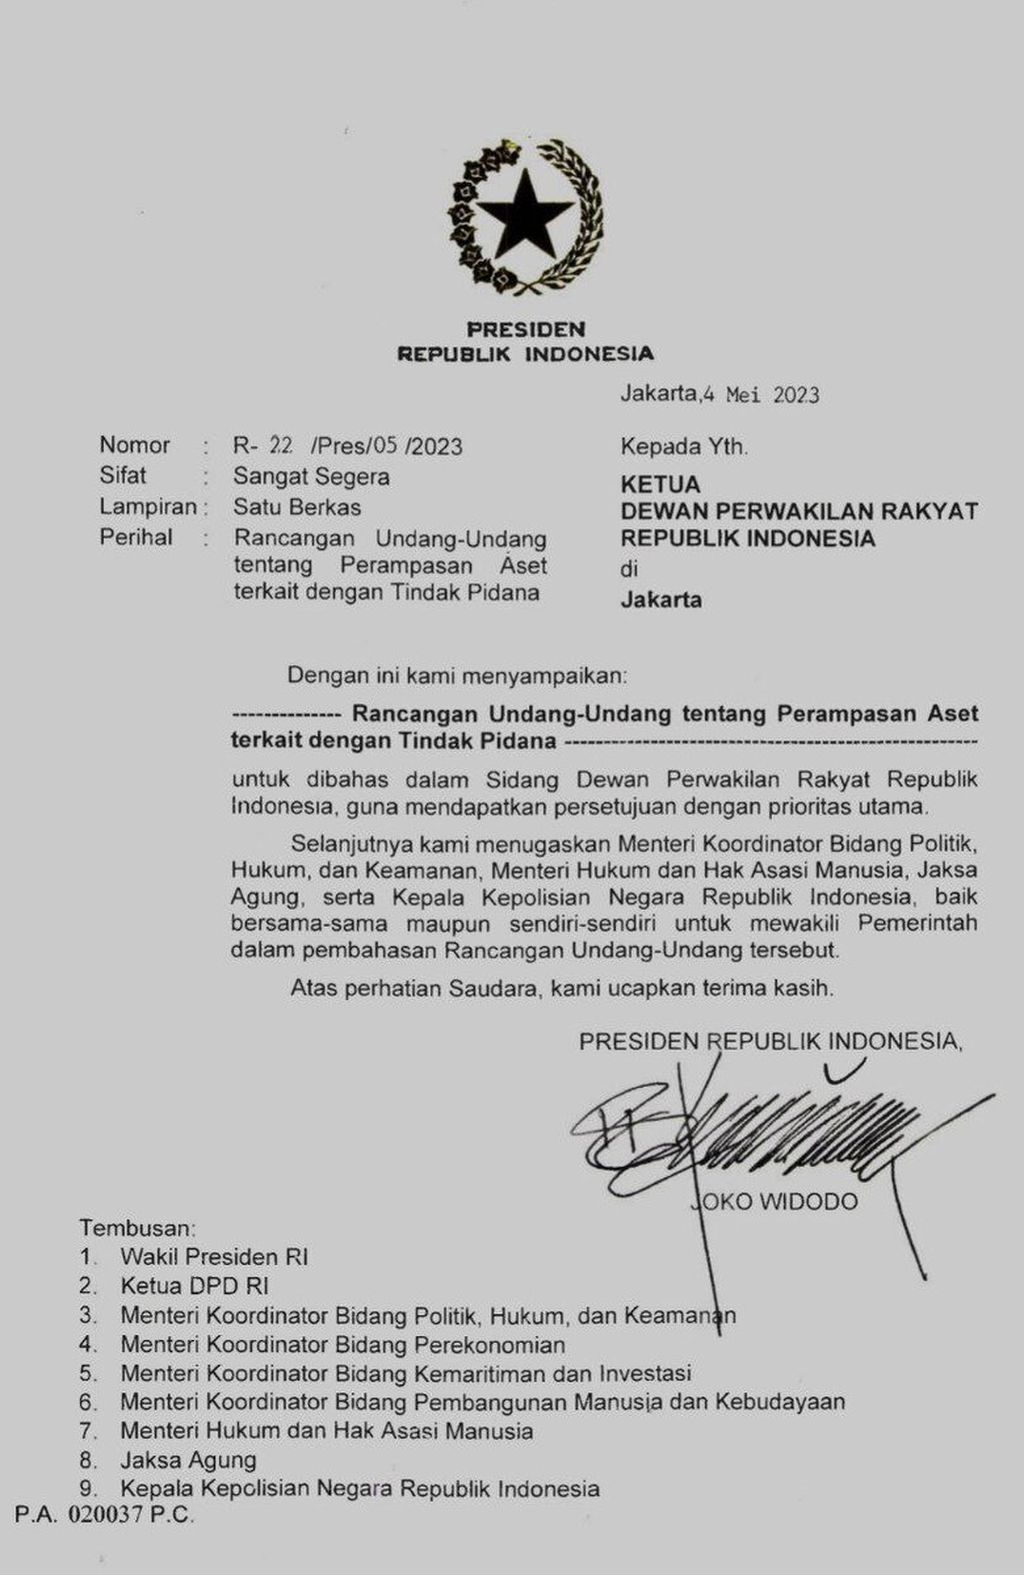 Hasil tangkapan layar surat presiden (surpres) yang dikirimkan pemerintah kepada DPR sebagai permintaan untuk membahas bersama draf Rancangan Undang-undang Perampasan Aset. Surat ditandatangani oleh Presiden Joko Widodo dan dikirimkan ke DPR tertanggal, Kamis (4/5/2023).